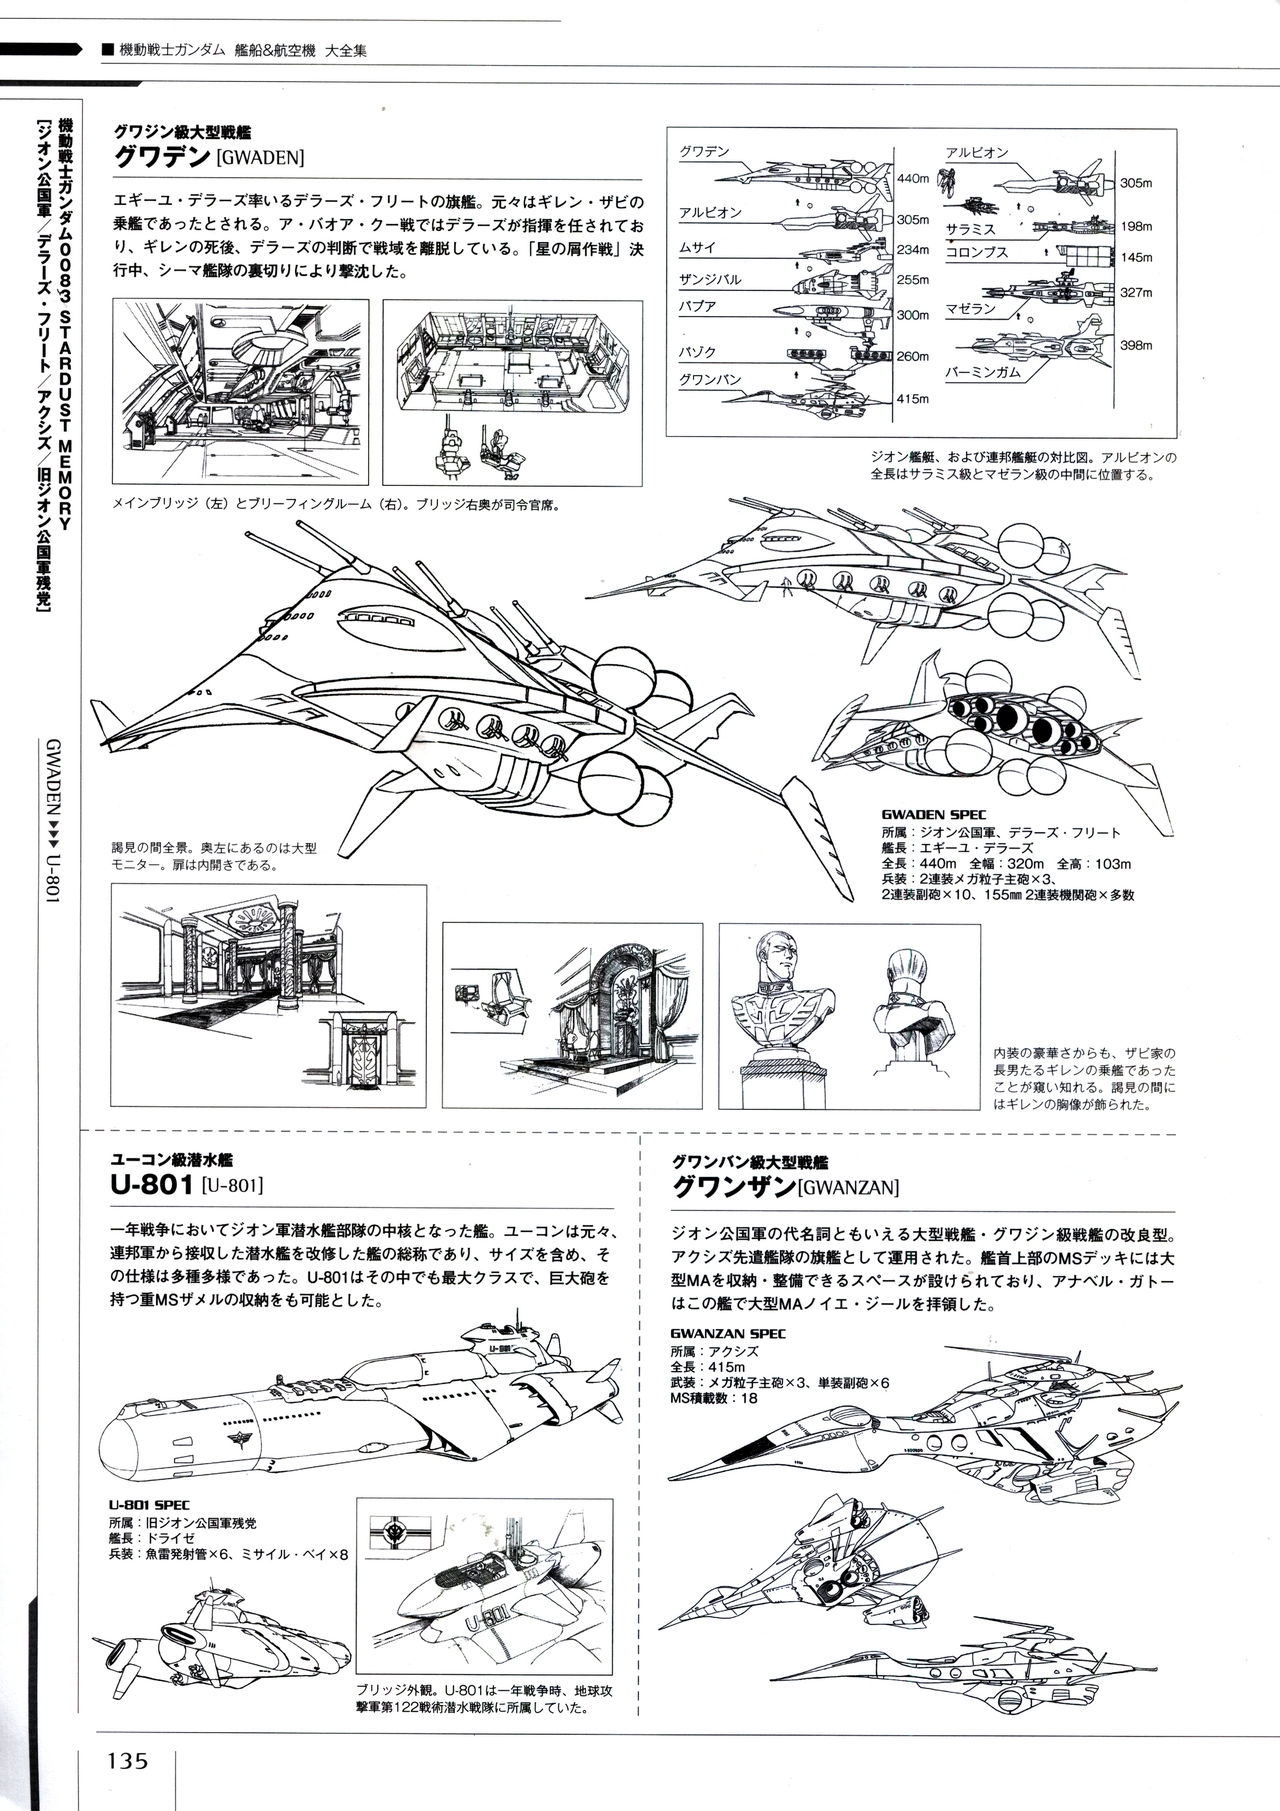 Mobile Suit Gundam - Ship & Aerospace Plane Encyclopedia - Revised Edition 140